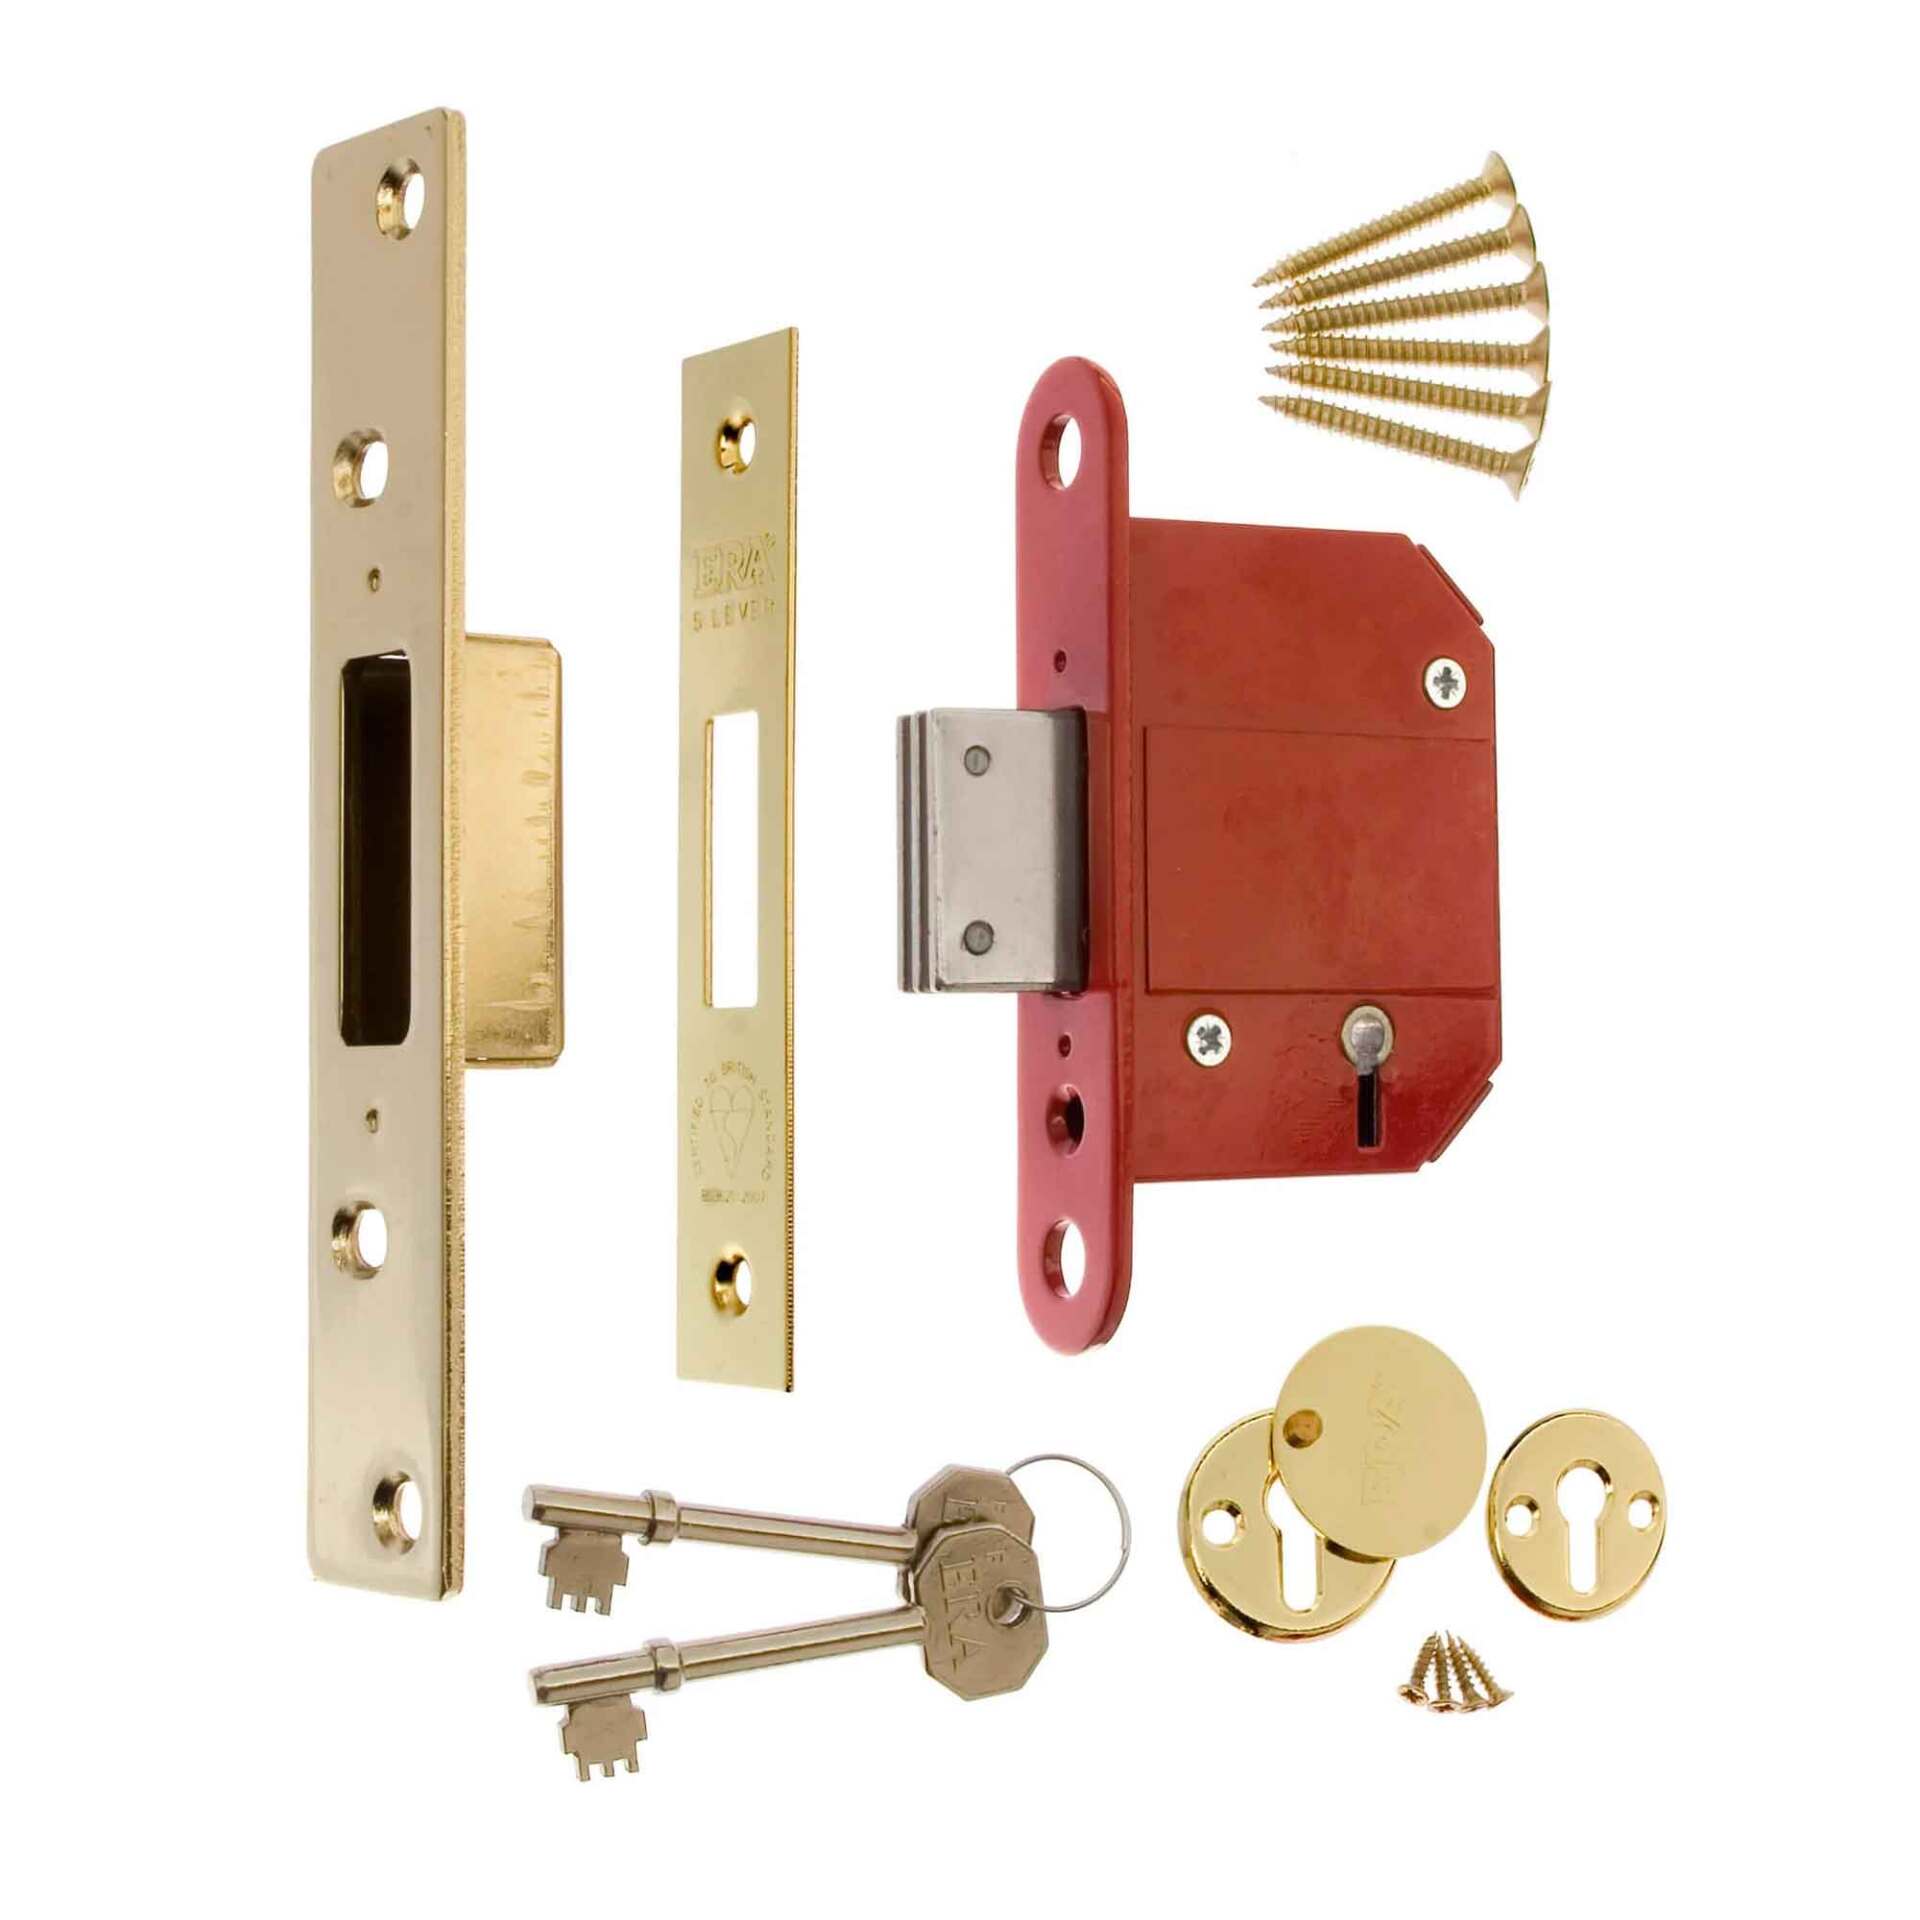 Best mortice locks (Chubb locks) installers in Plymouth, Devon & East Cornwall.